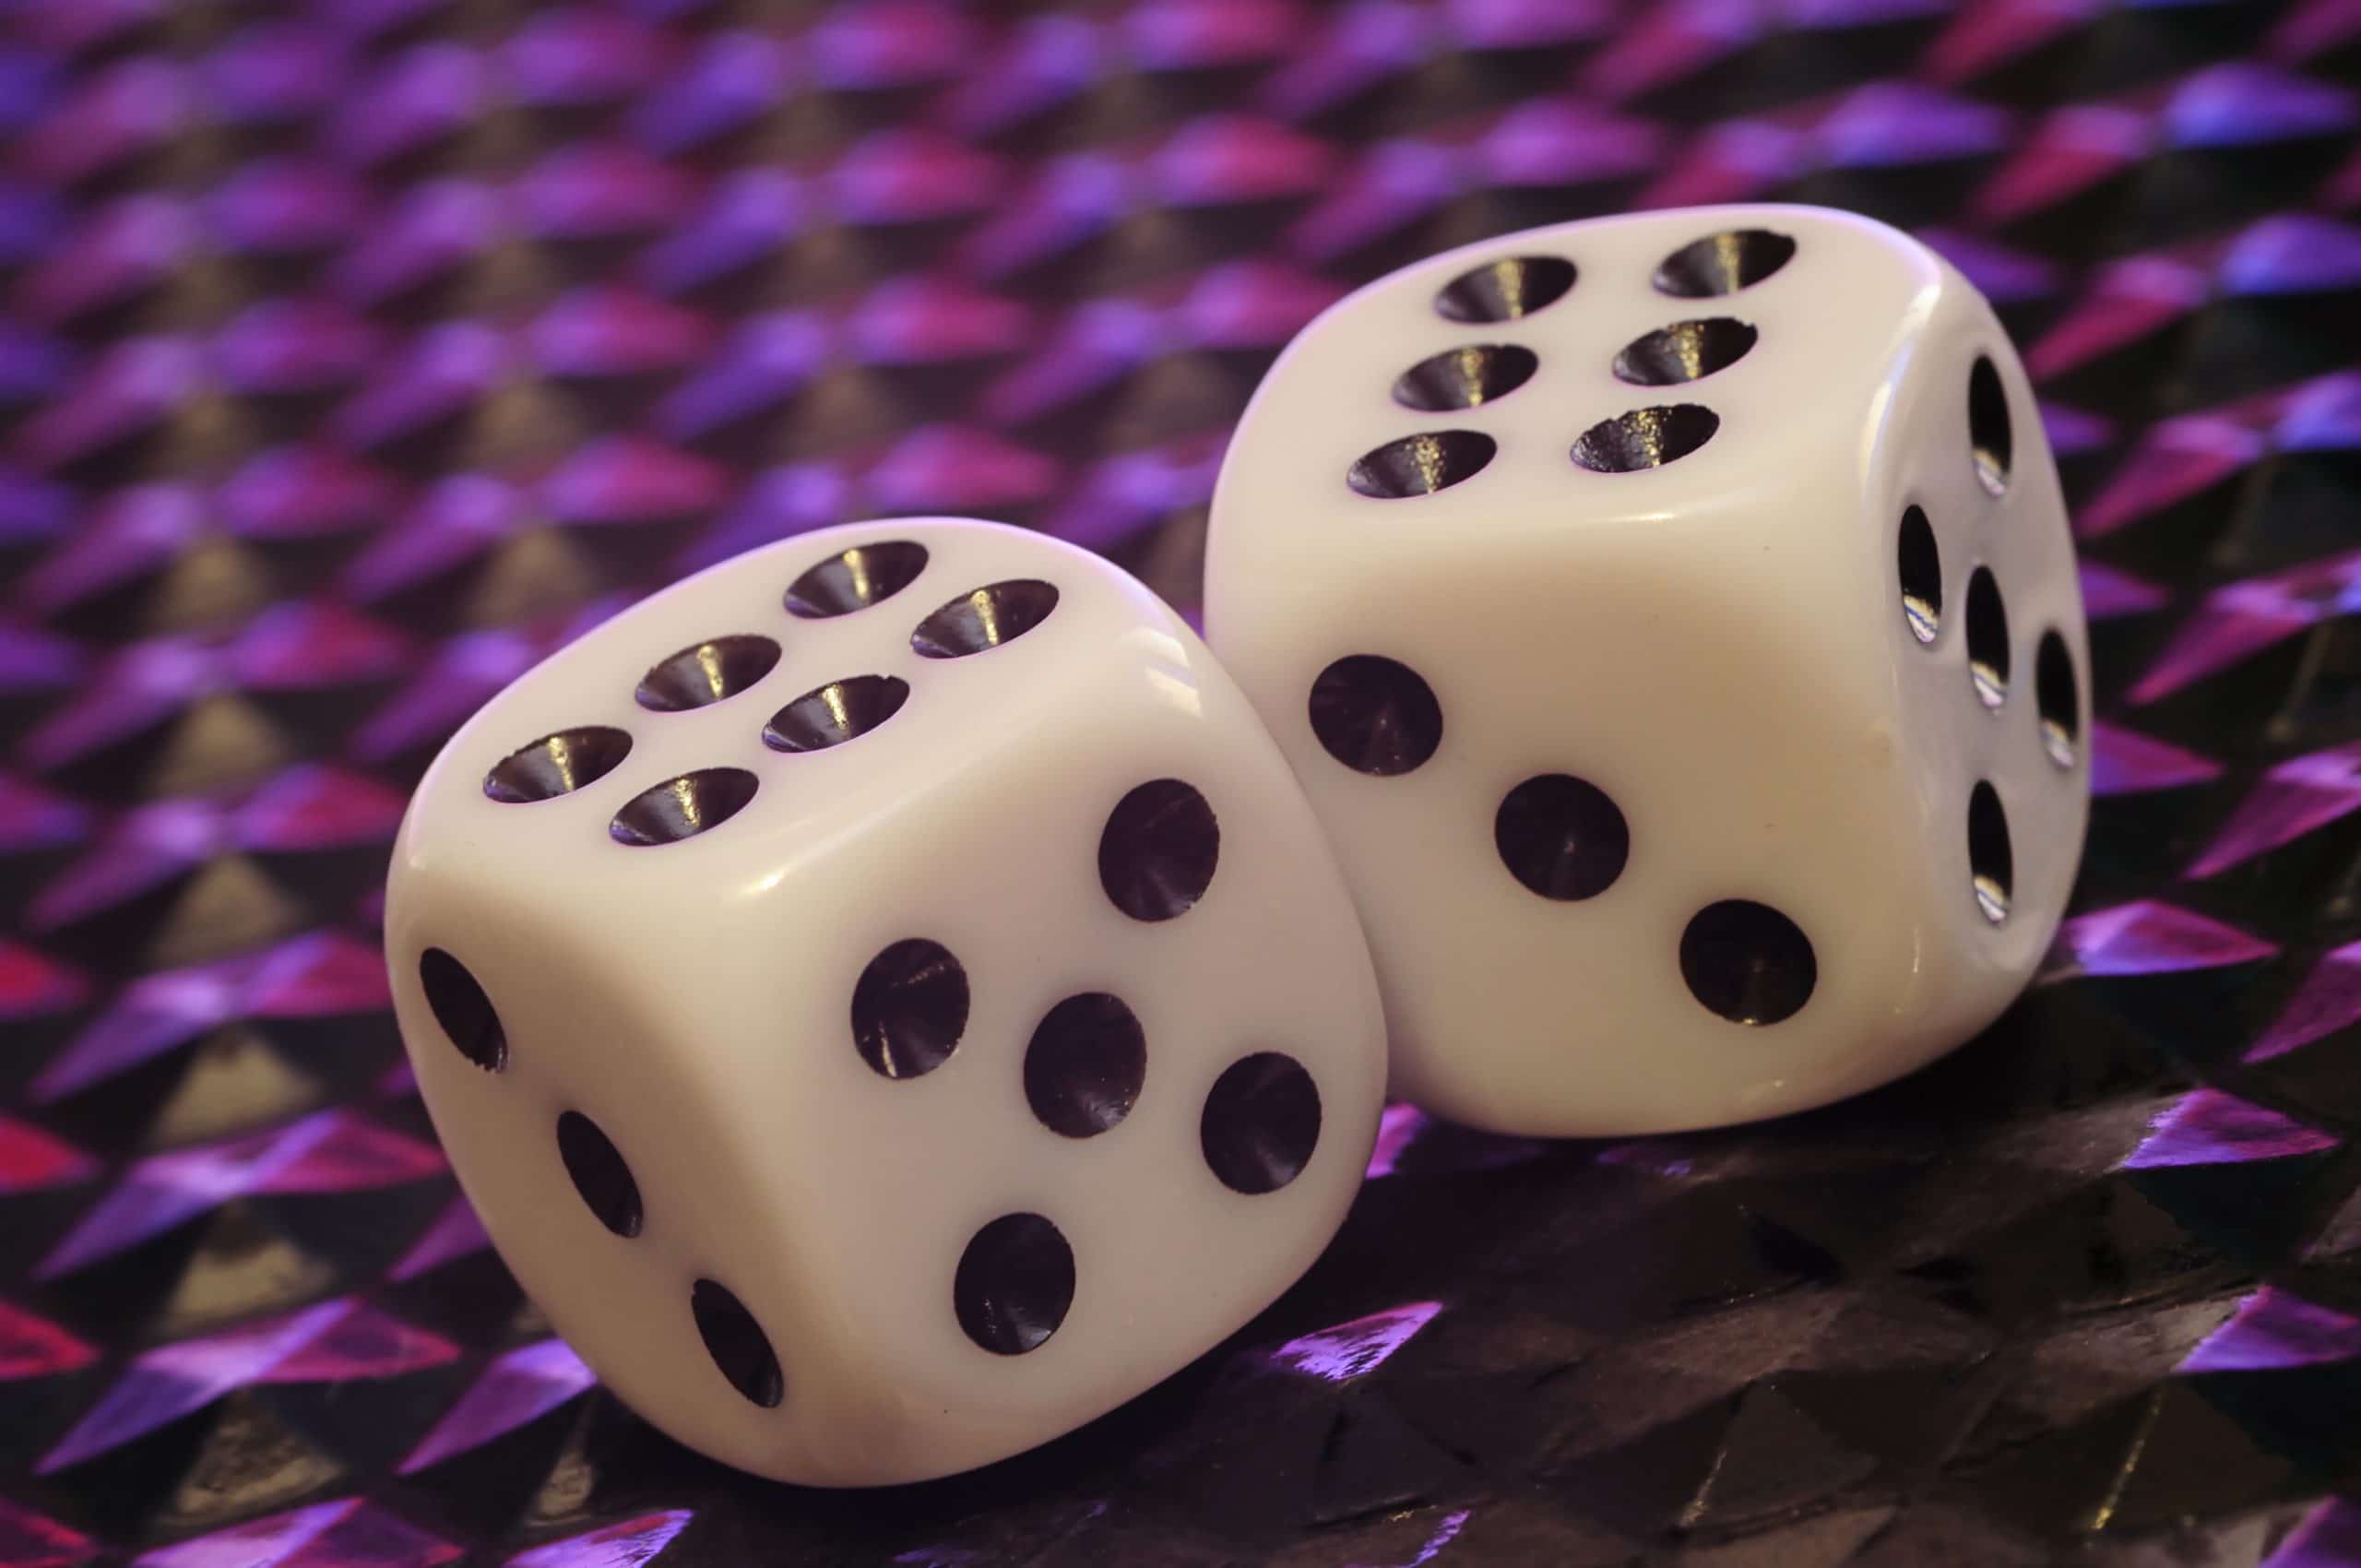 dice - showing randomness